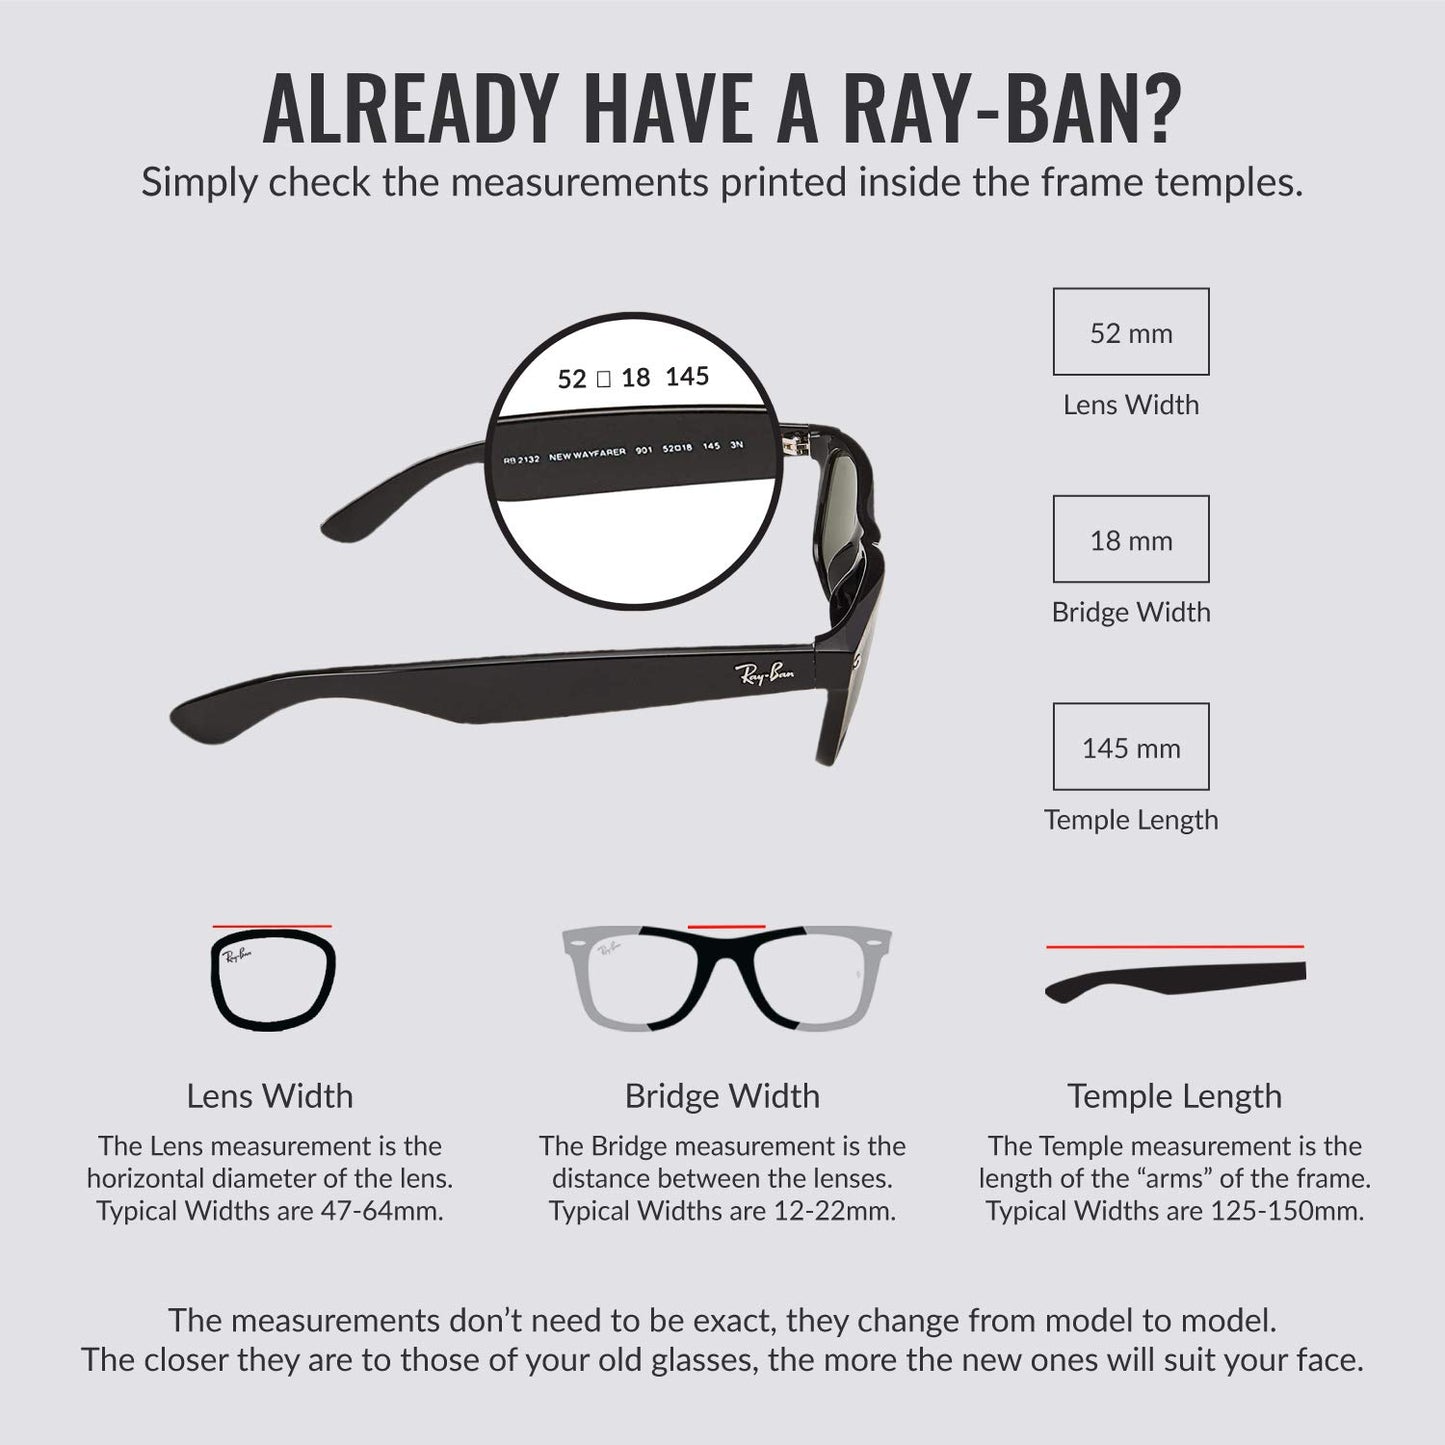 Ray-Ban Anti-Reflective Square Unisex Sunglasses (Green)